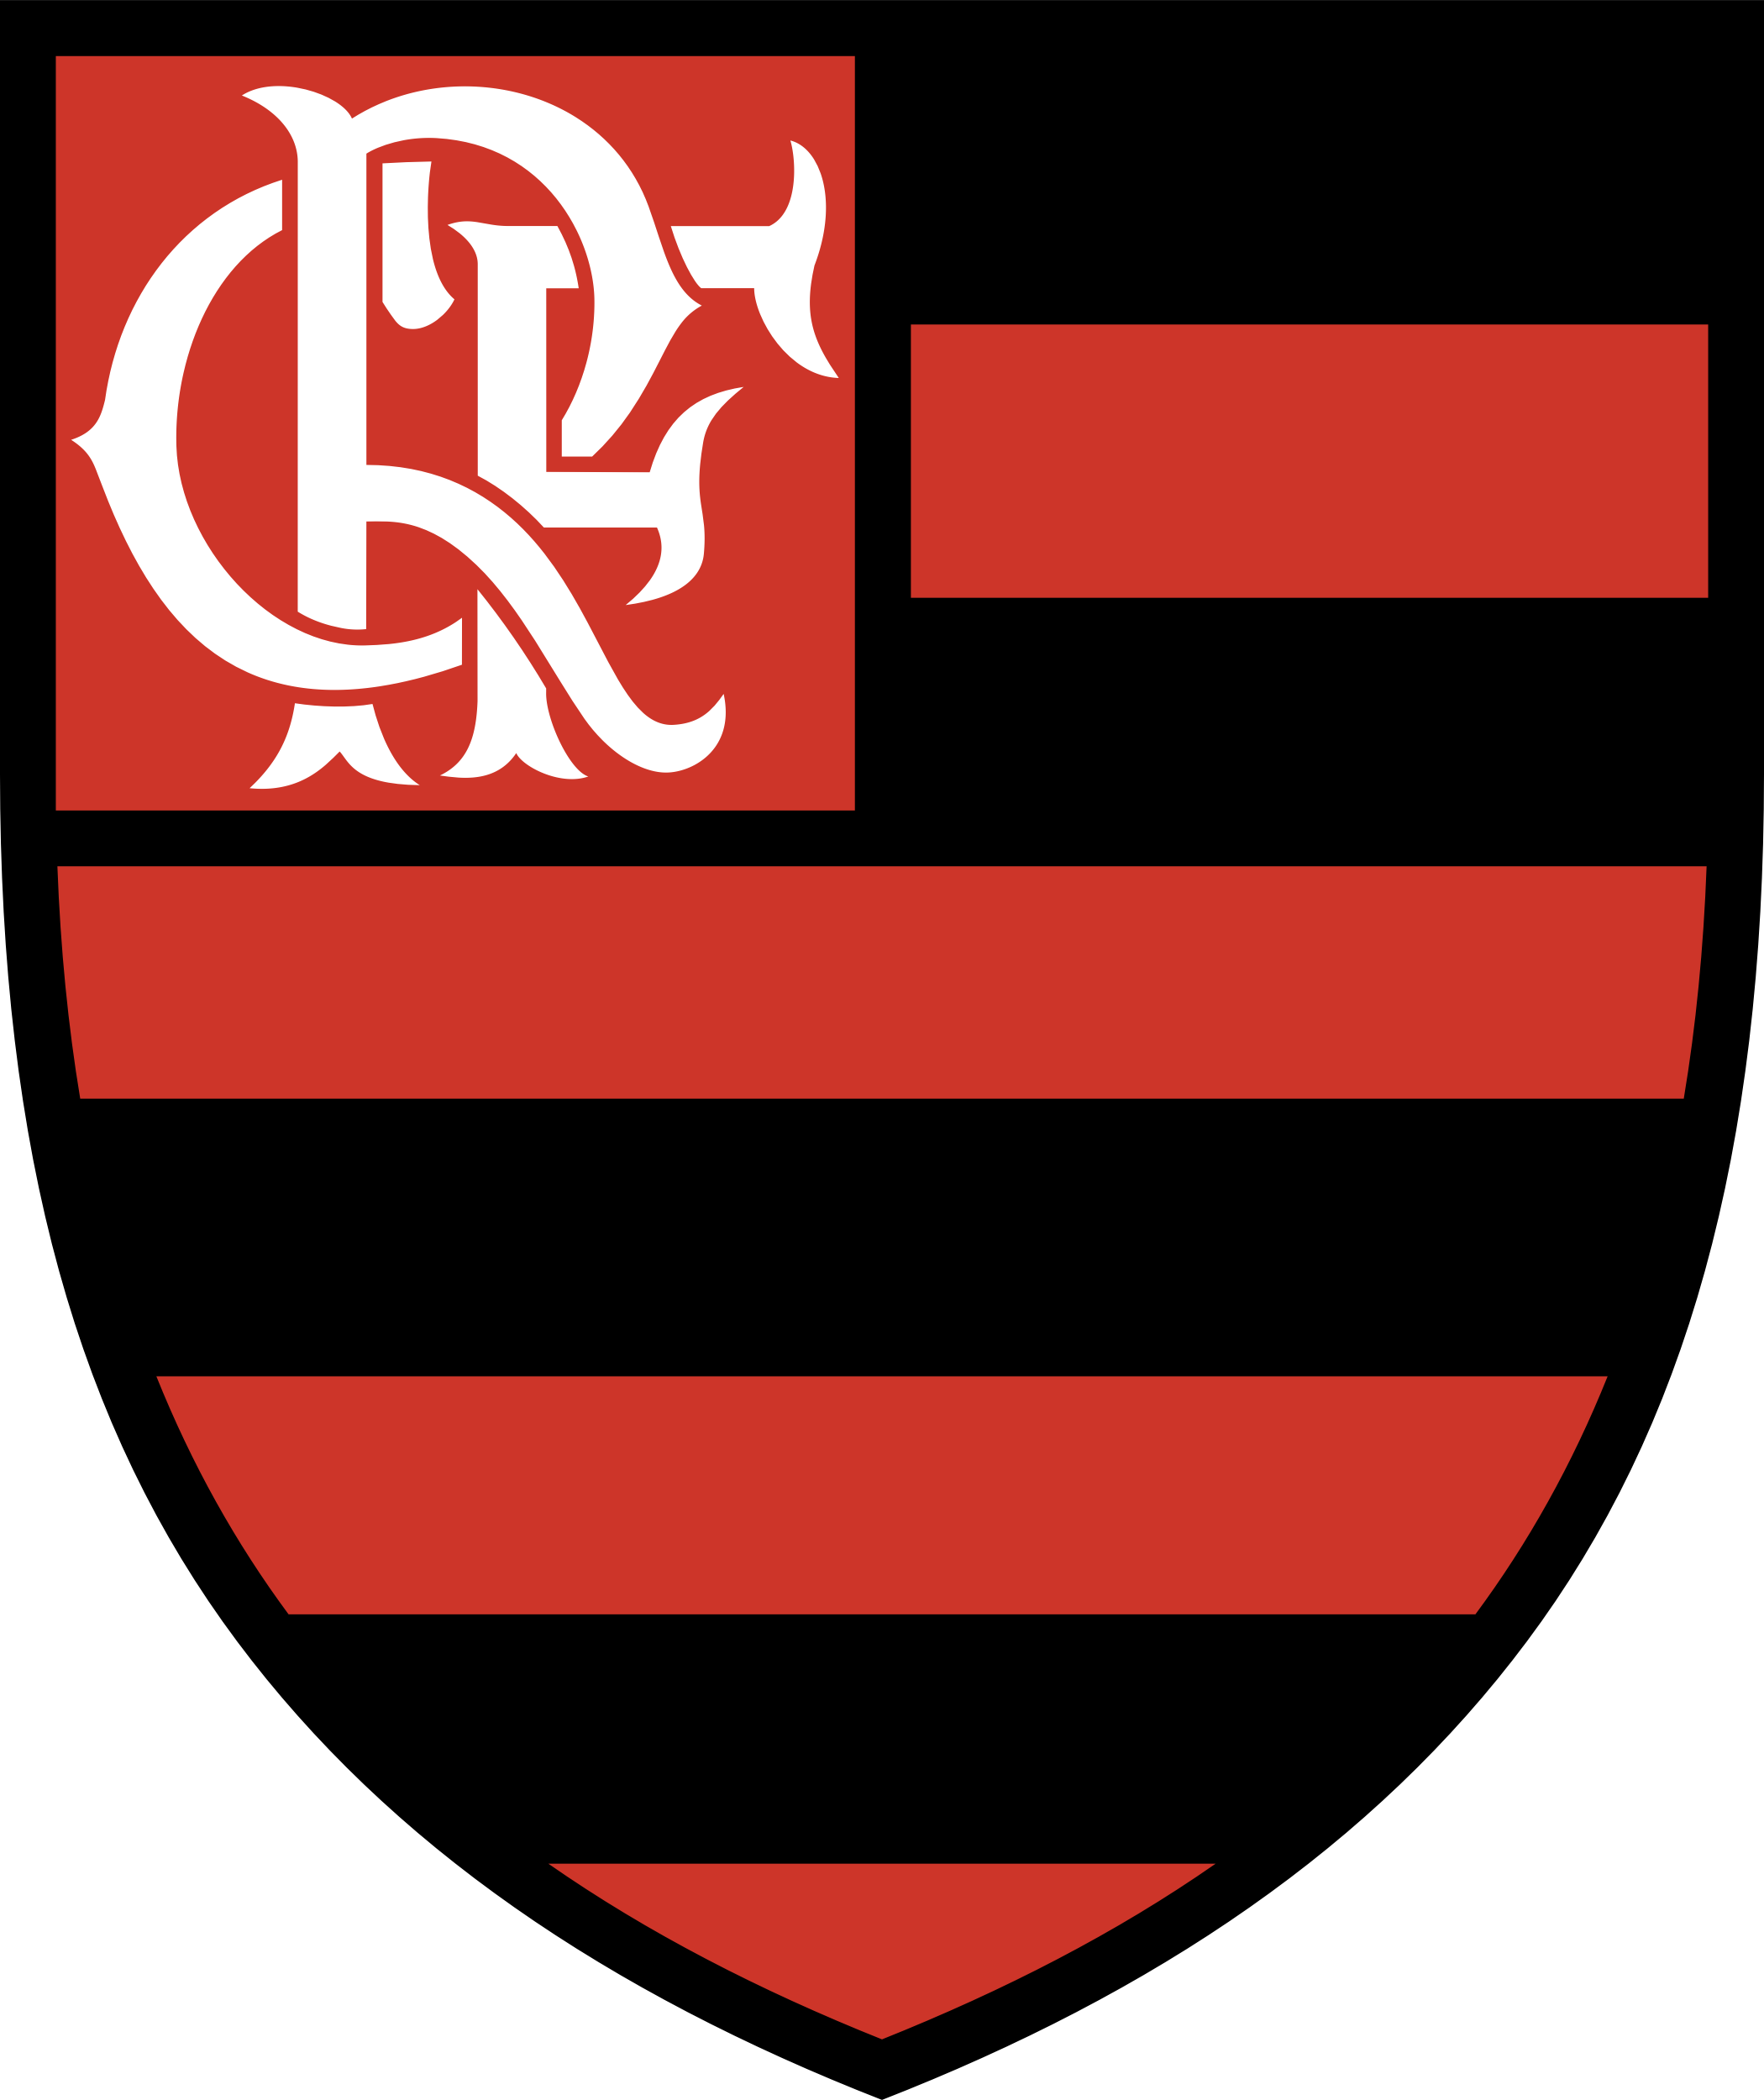 Escudo Flamengo